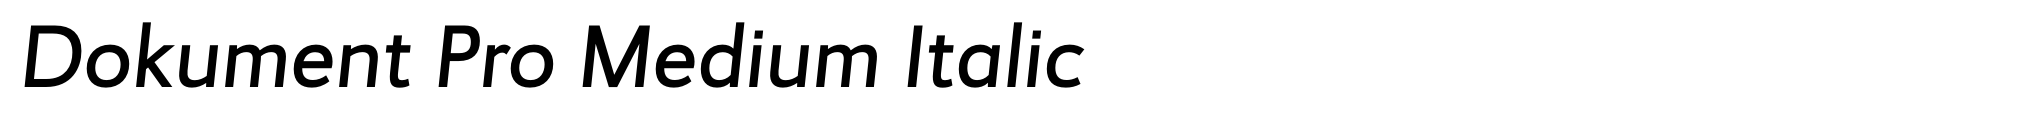 Dokument Pro Medium Italic image